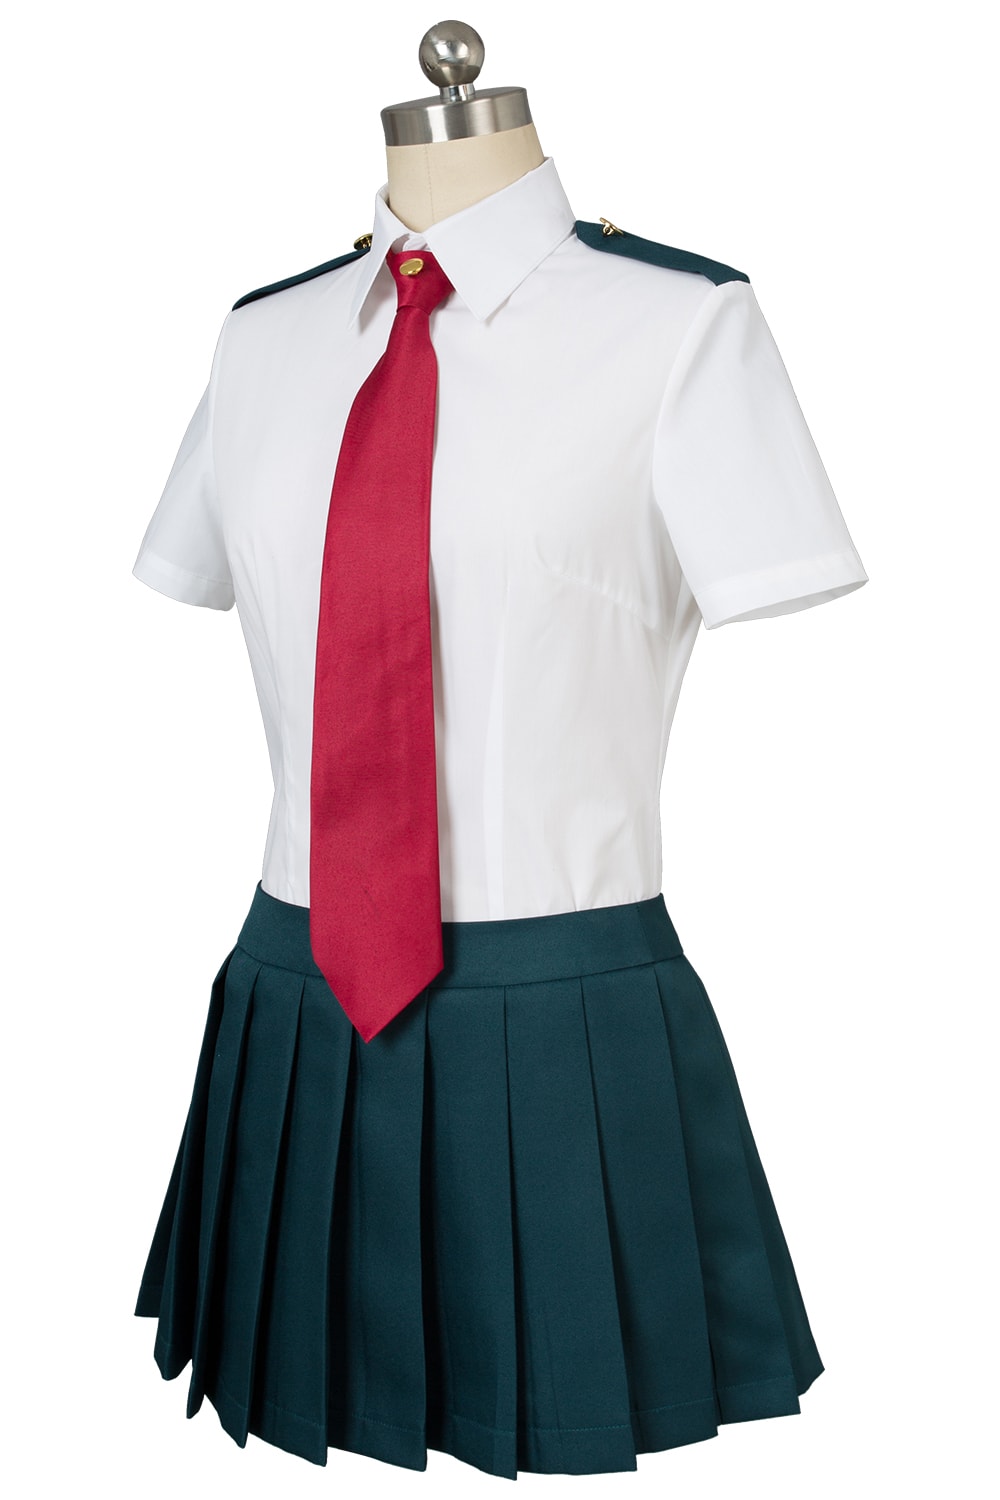 Boku no Hero Academia Fille Uniforme Scolaire D'été Cosplay Costume